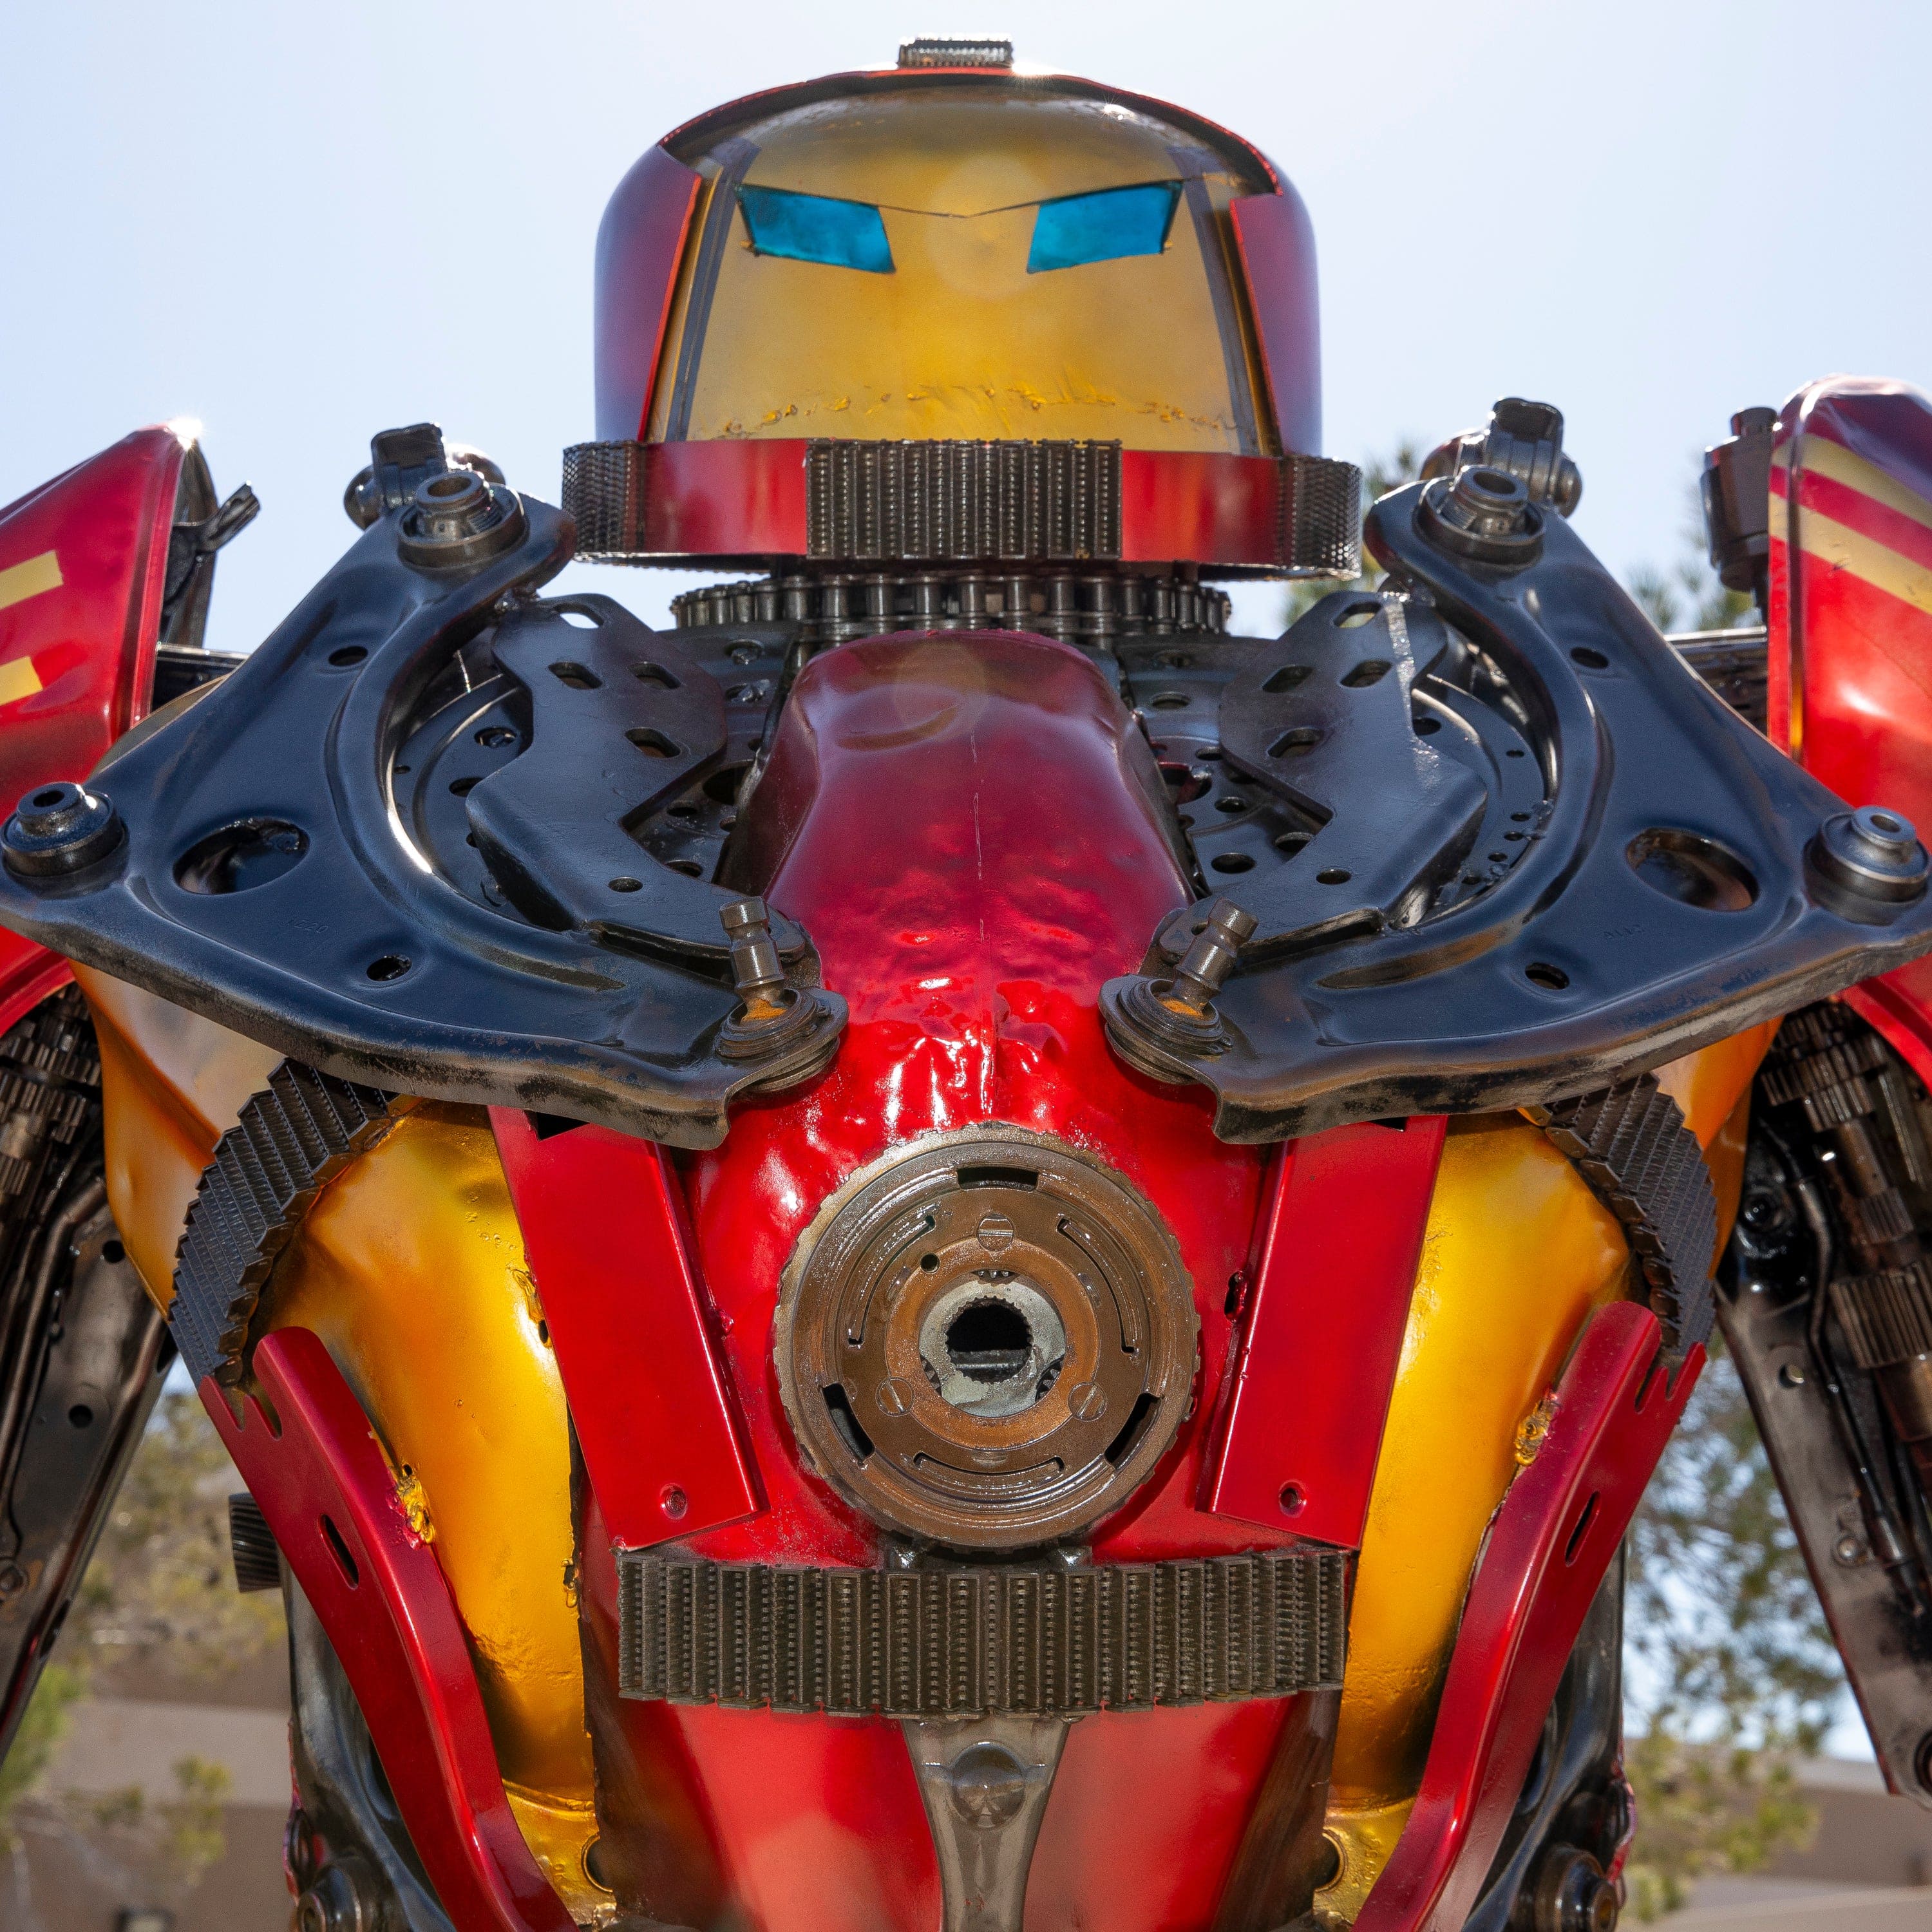 Kalifano Recycled Metal Art 102" Iron Man Hulk Buster Inspired Recycled Metal Art Sculpture RMS-IMR260-S03